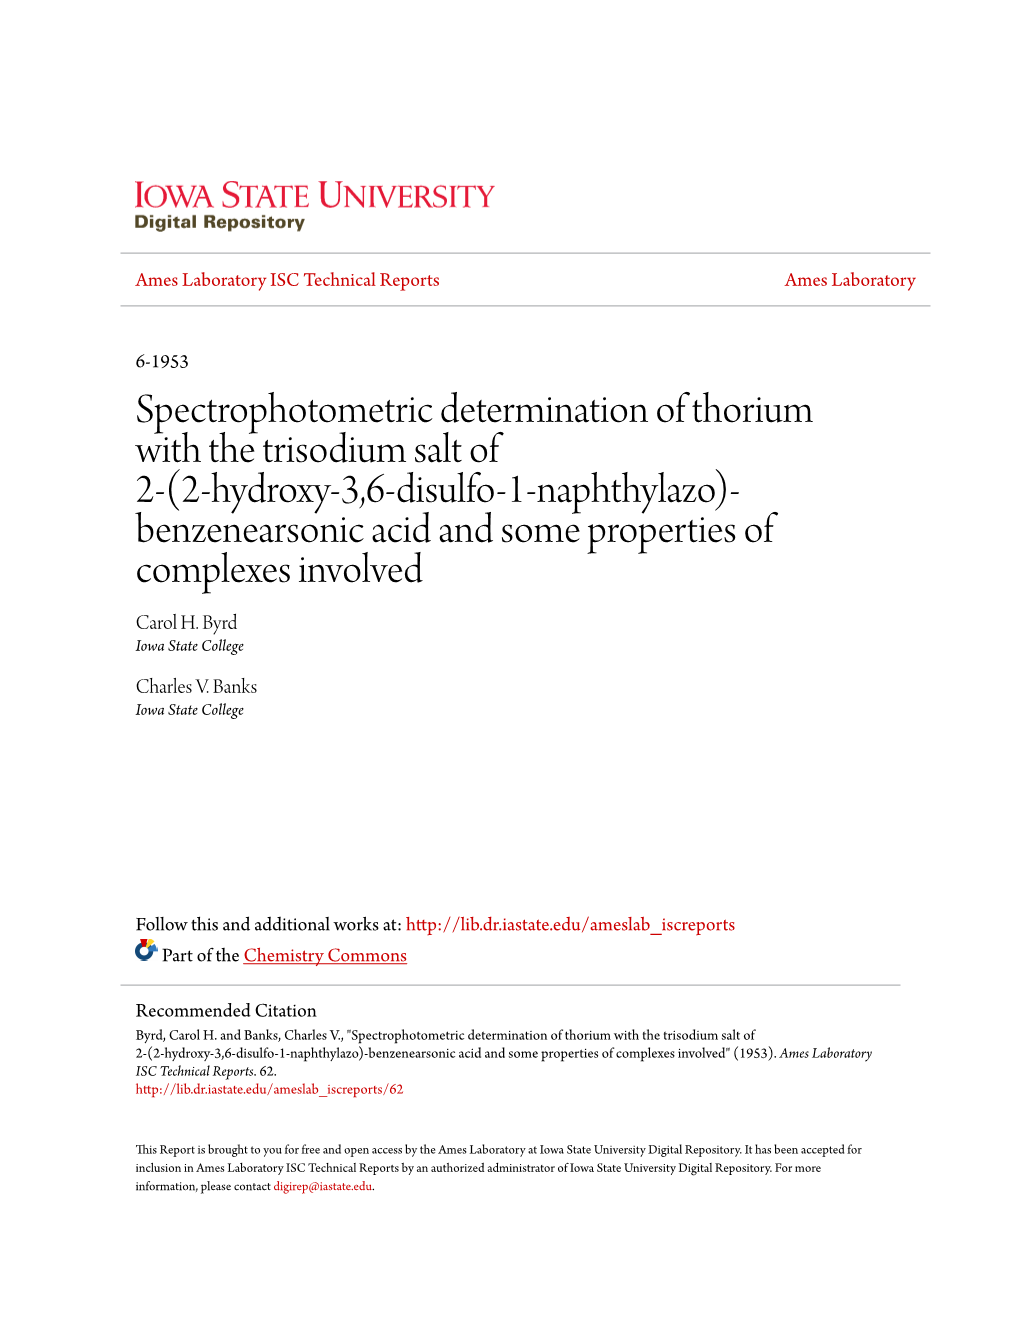 Spectrophotometric Determination of Thorium with the Trisodium Salt of 2-(2-Hydroxy-3,6-Disulfo-1-Naphthylazo)